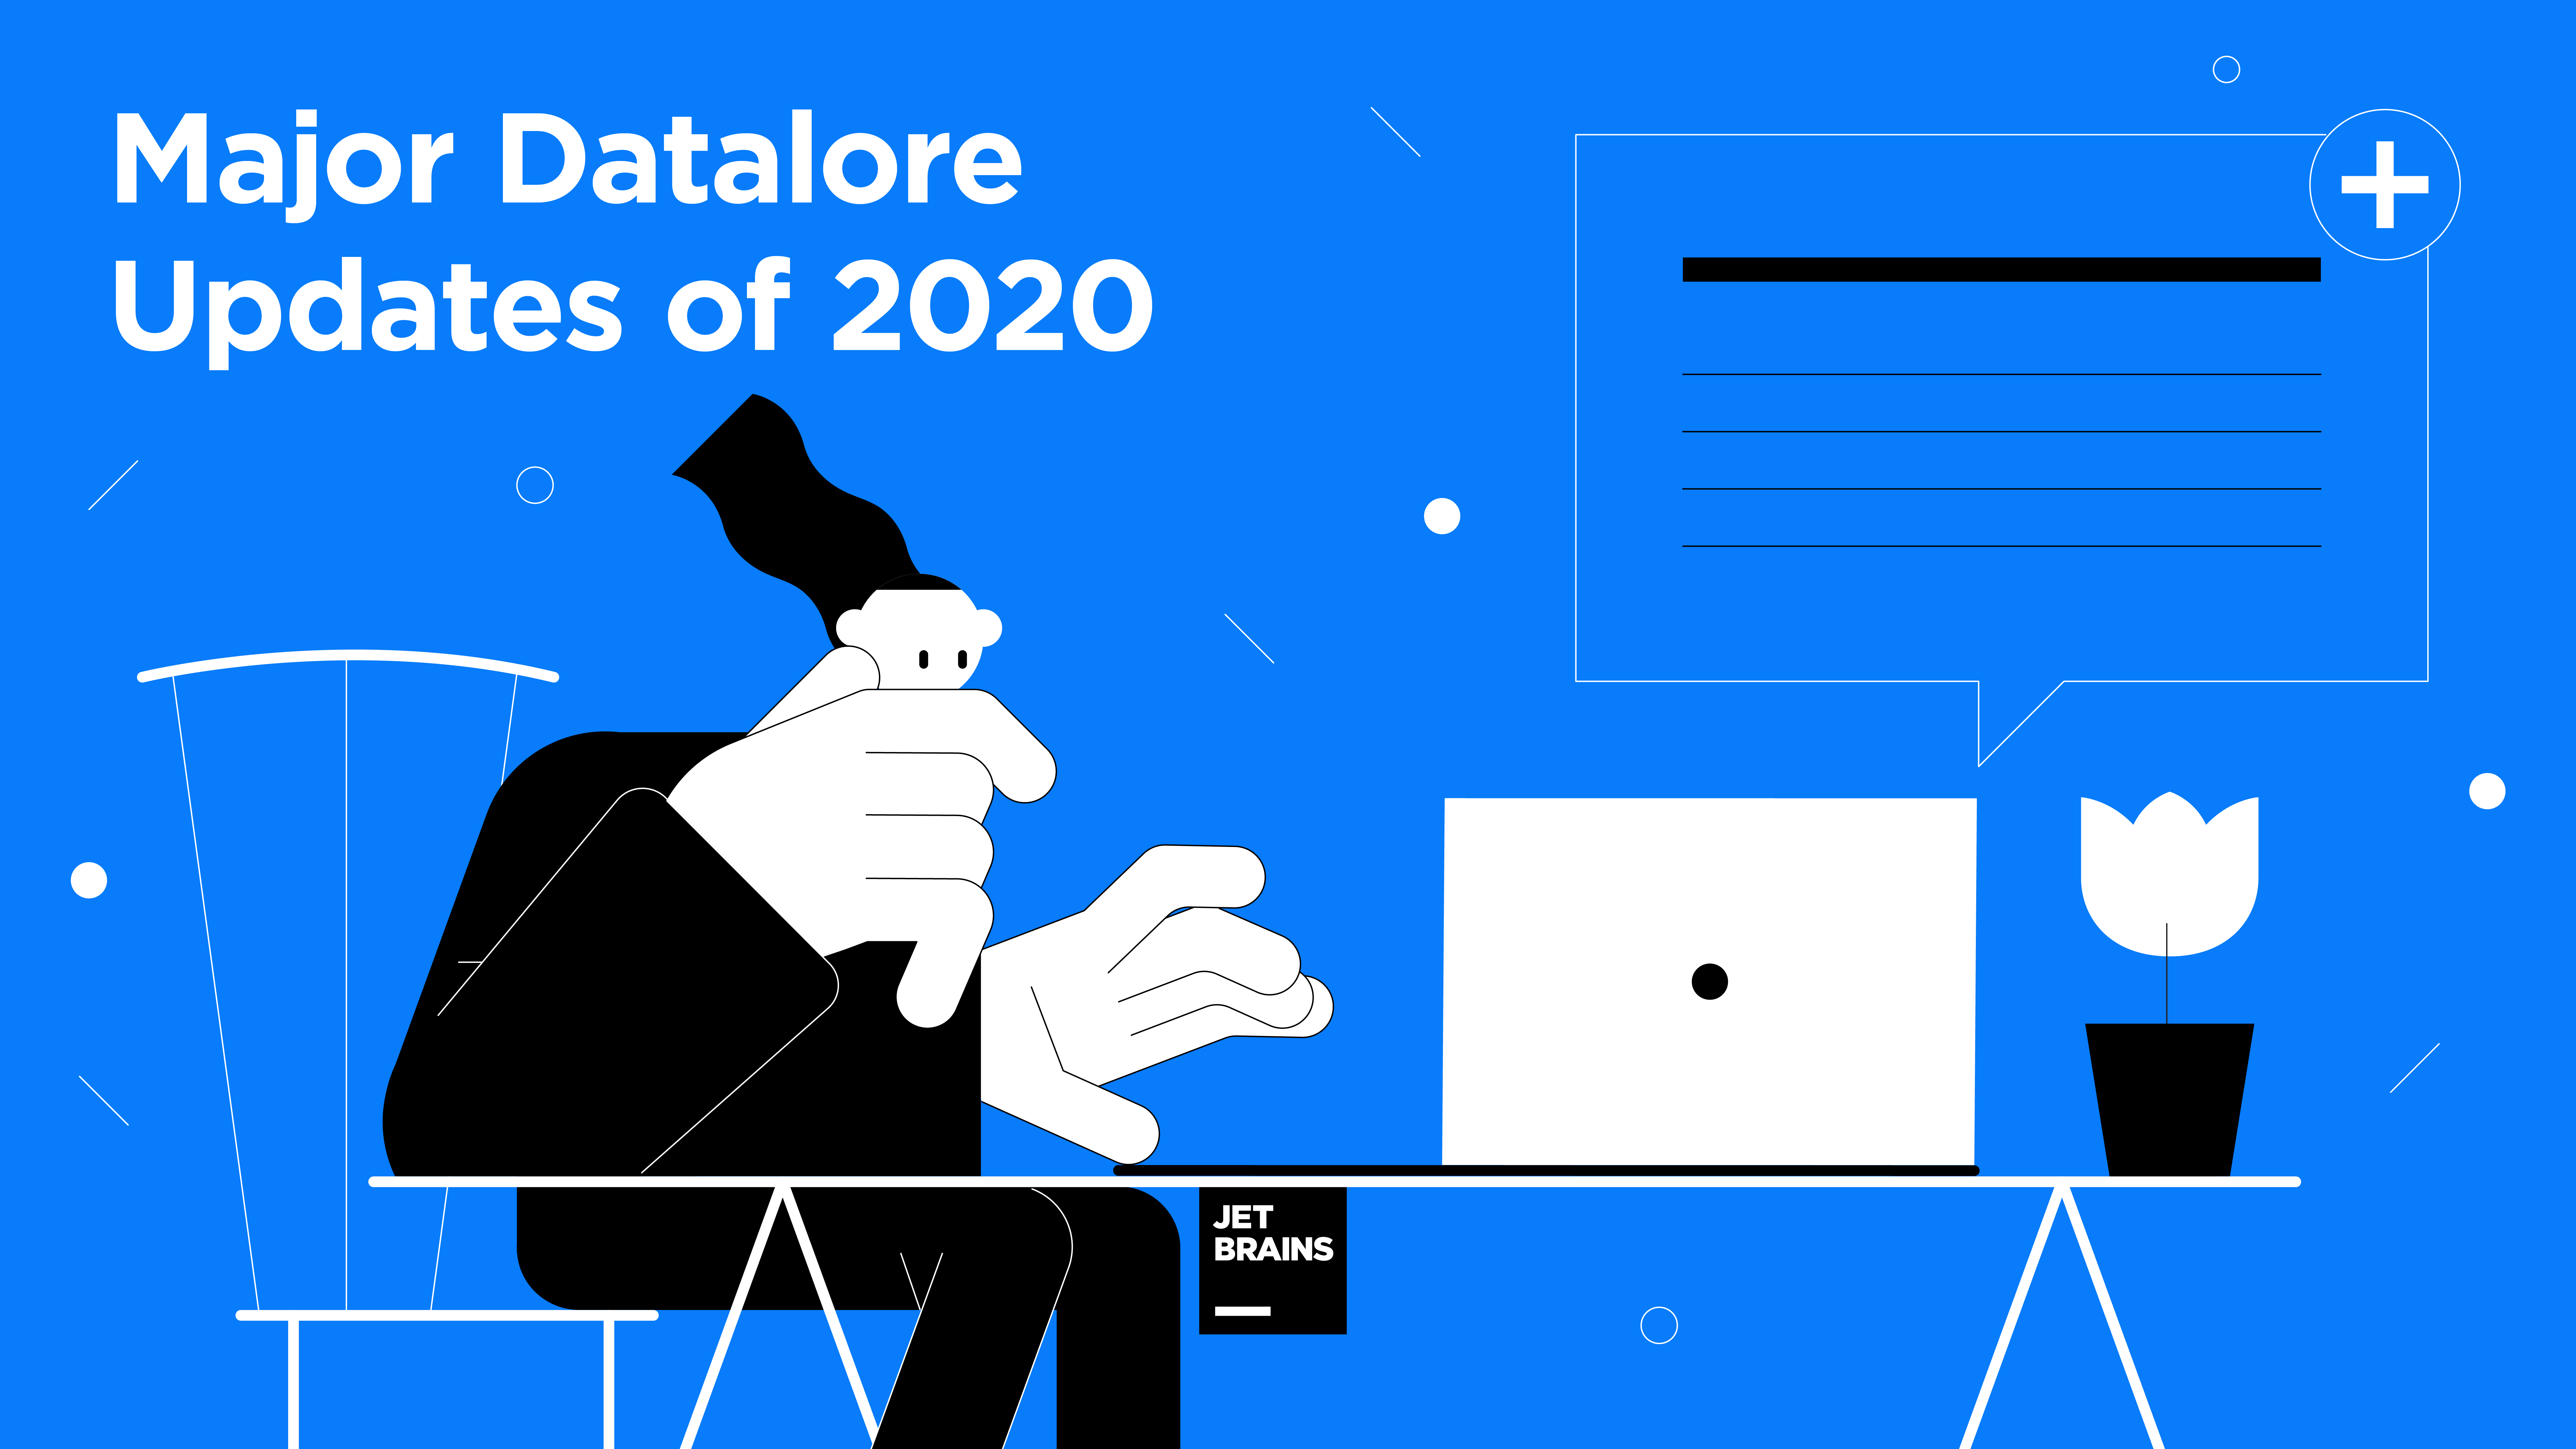 Major Datalore Updates of 2020